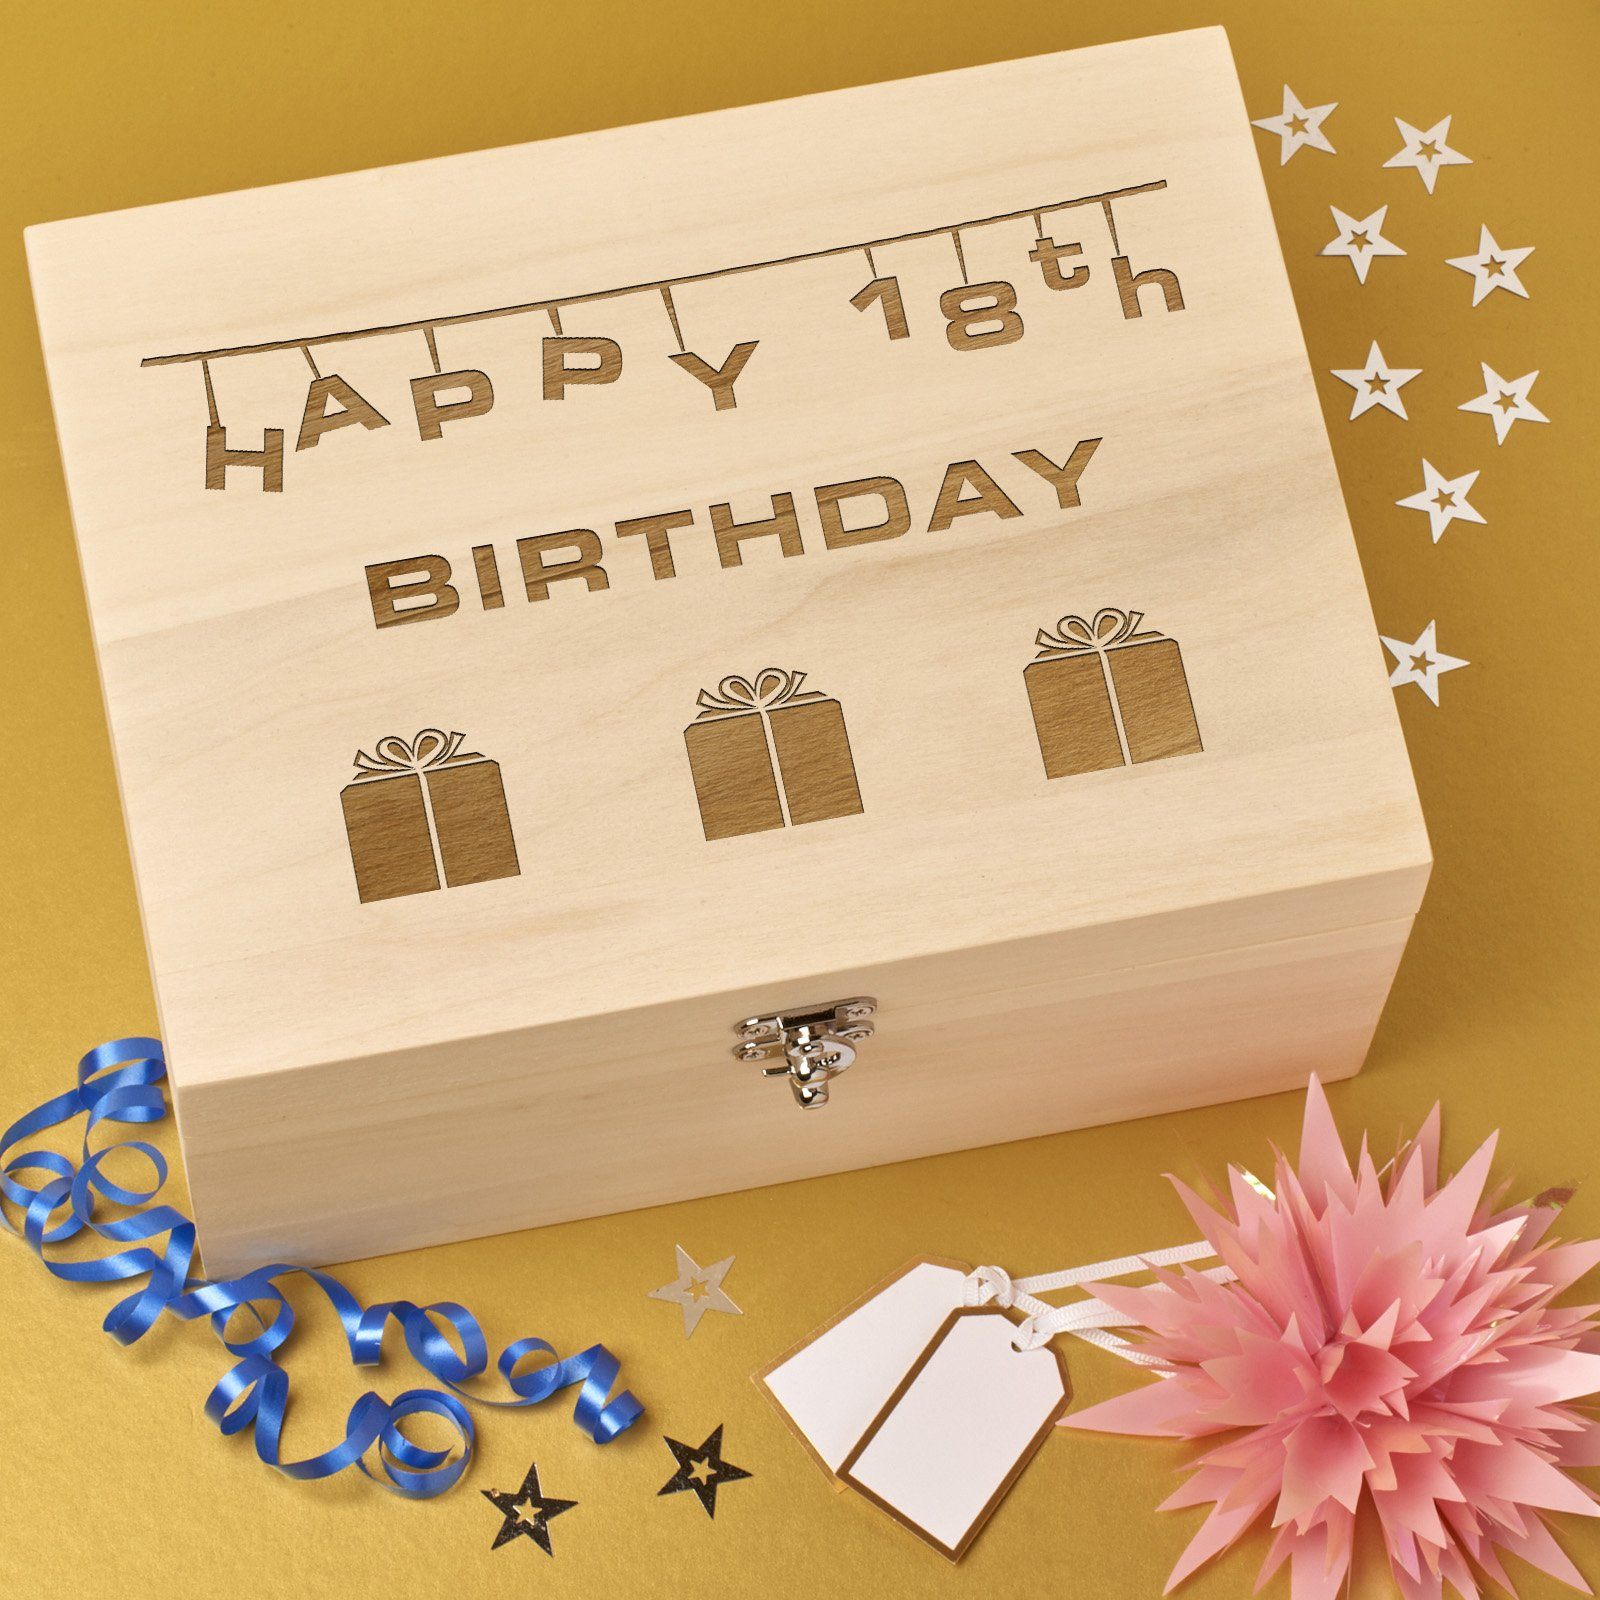 Christening Box - Laser Engraved Wooden Memory Keepsake Box With Hinged Lid - 18th Birthday Design